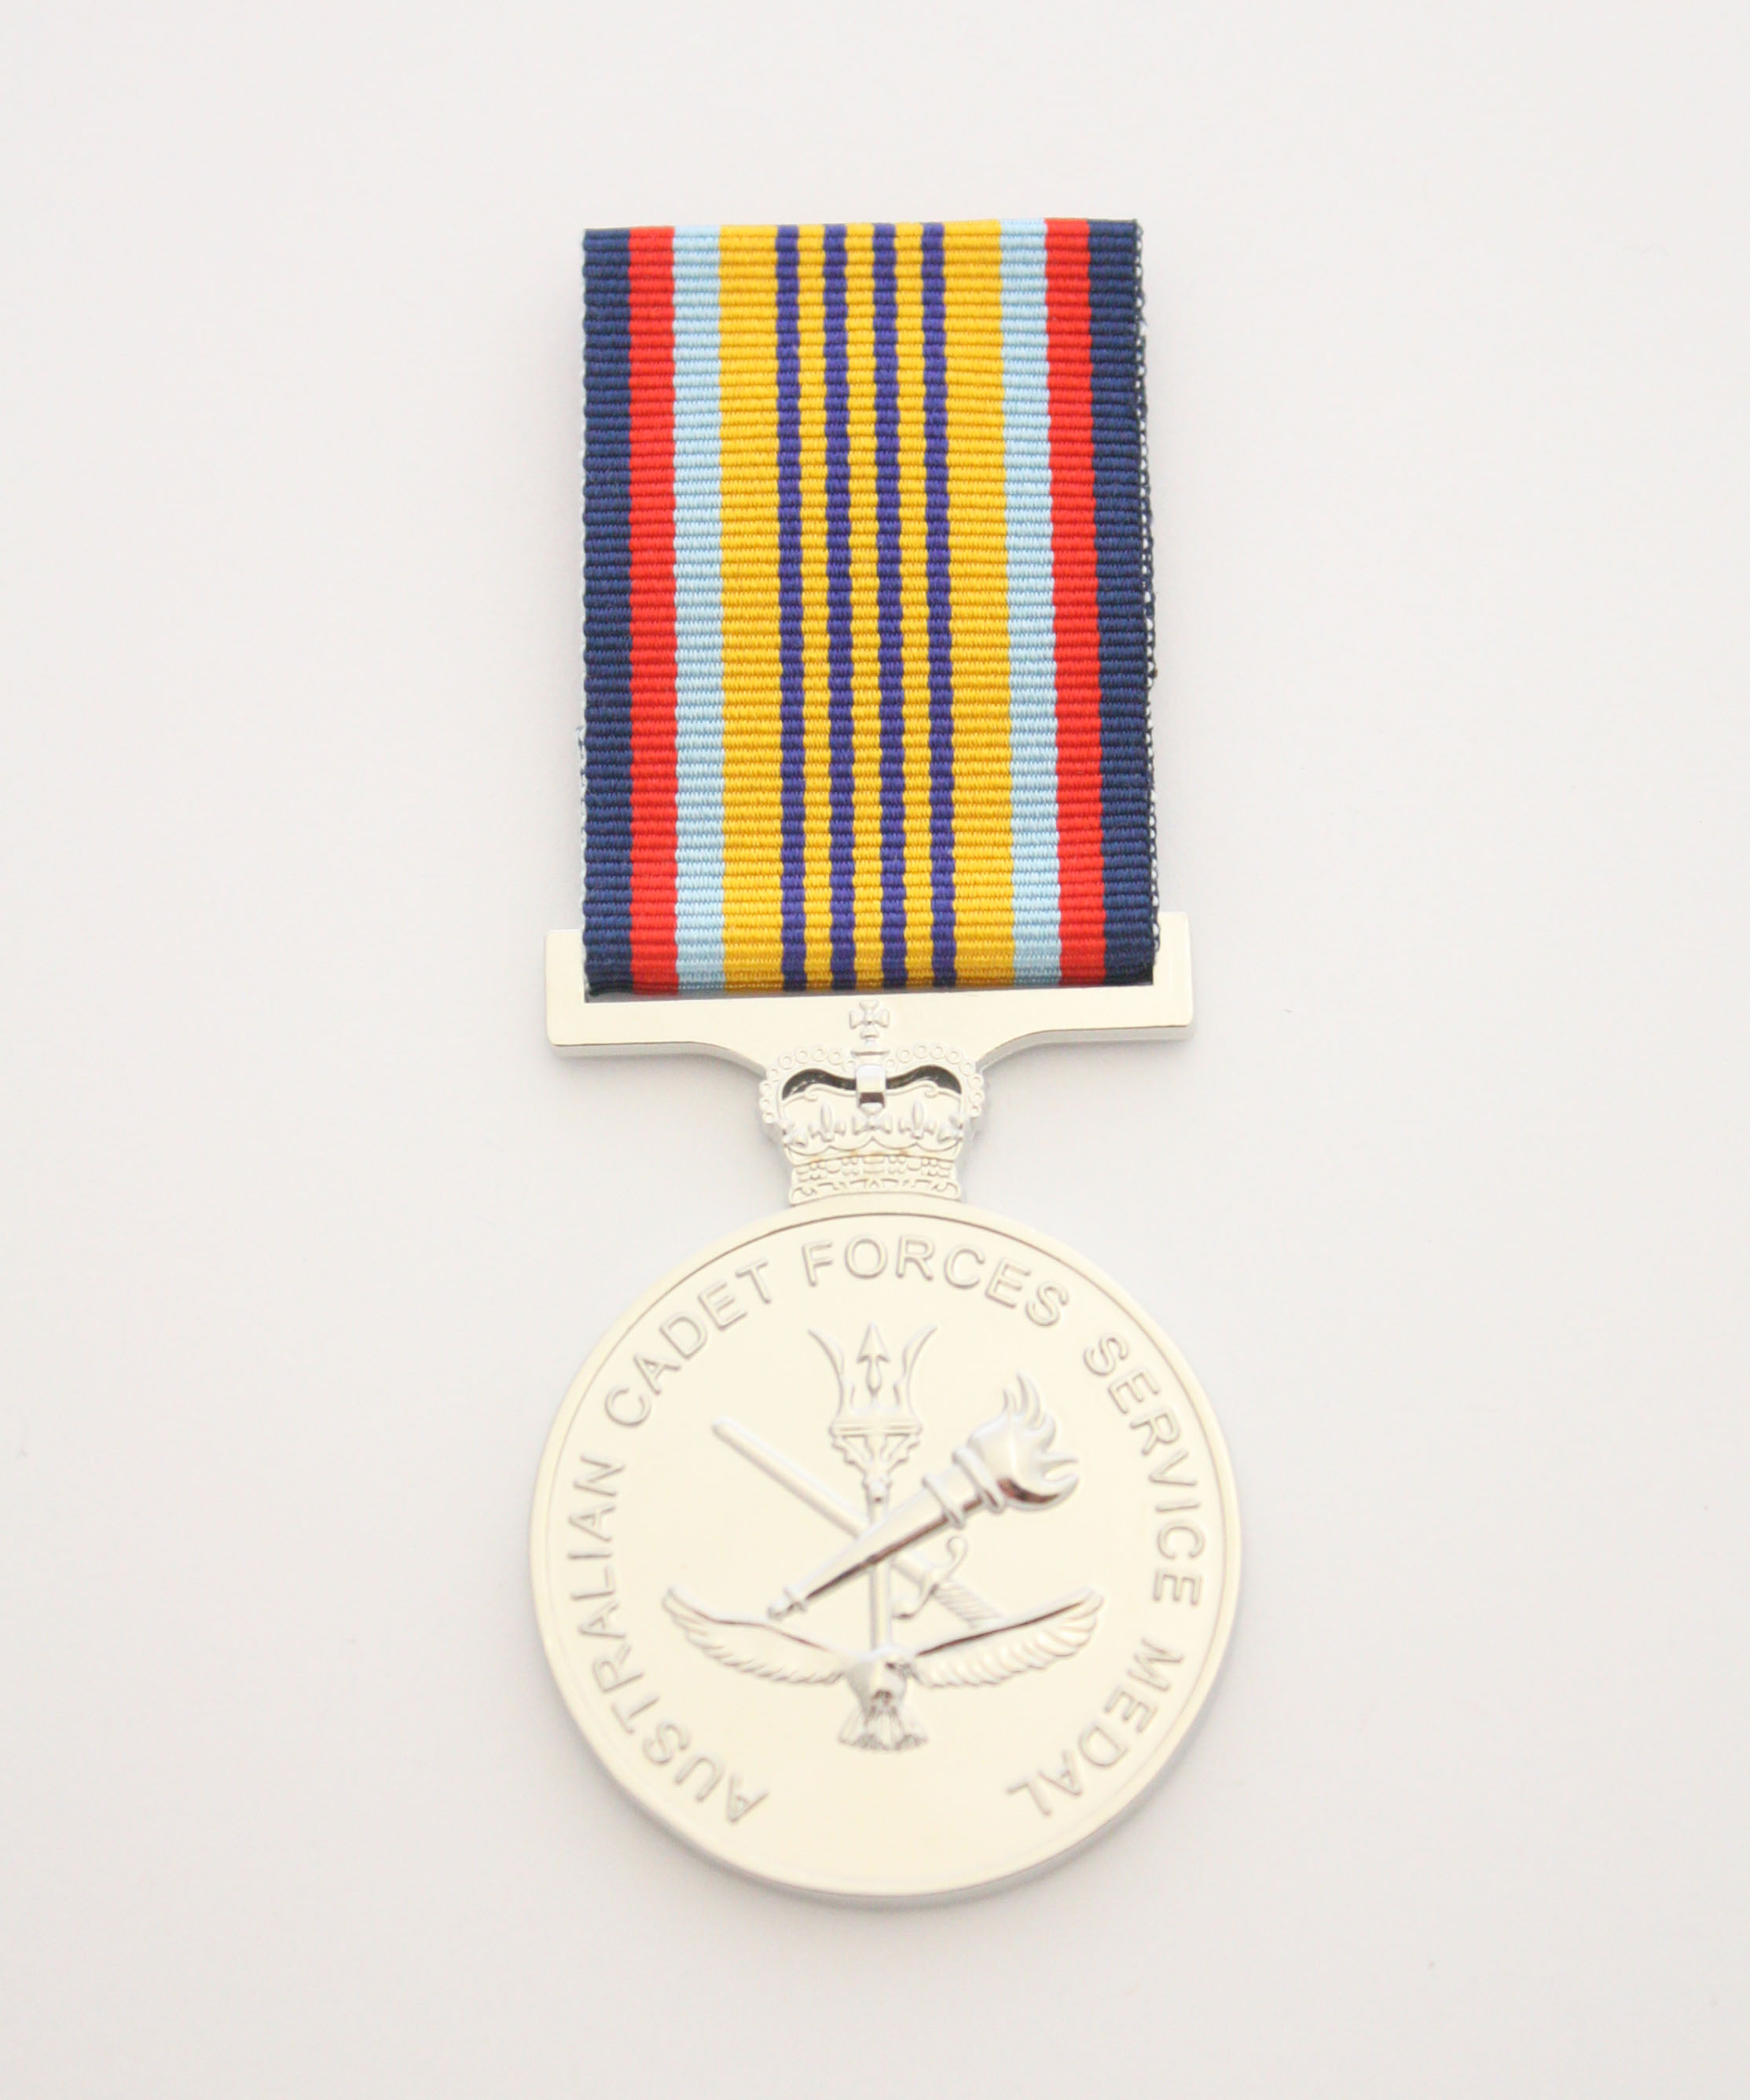 Aust. Cadet Forces Service Medal